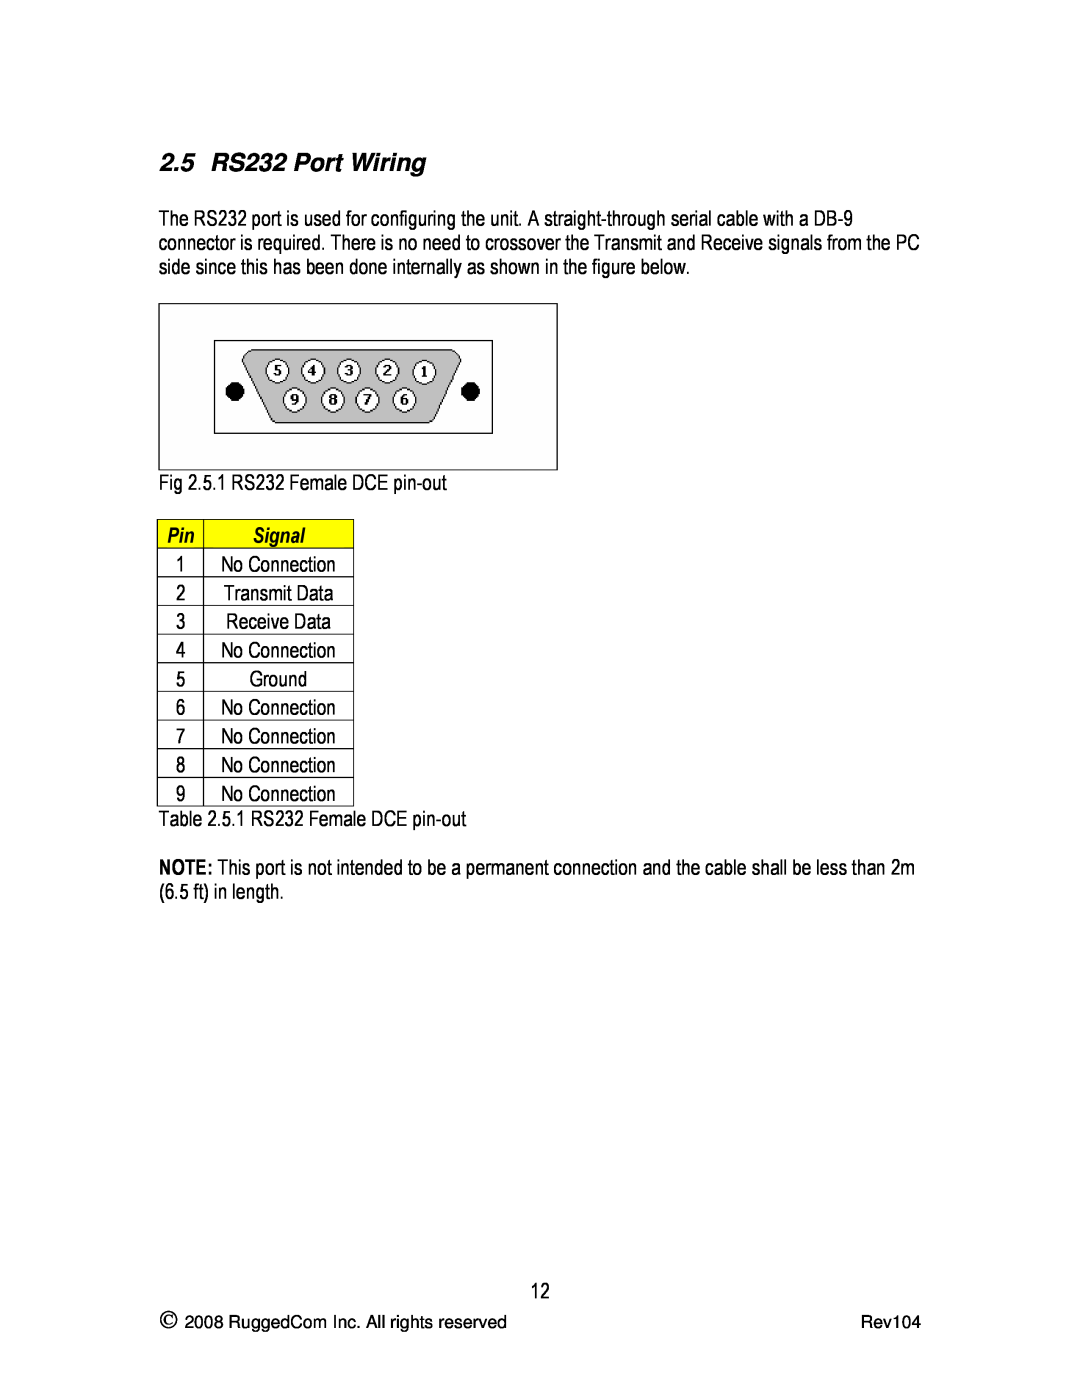 RuggedCom RS900G manual 2.5 RS232 Port Wiring 